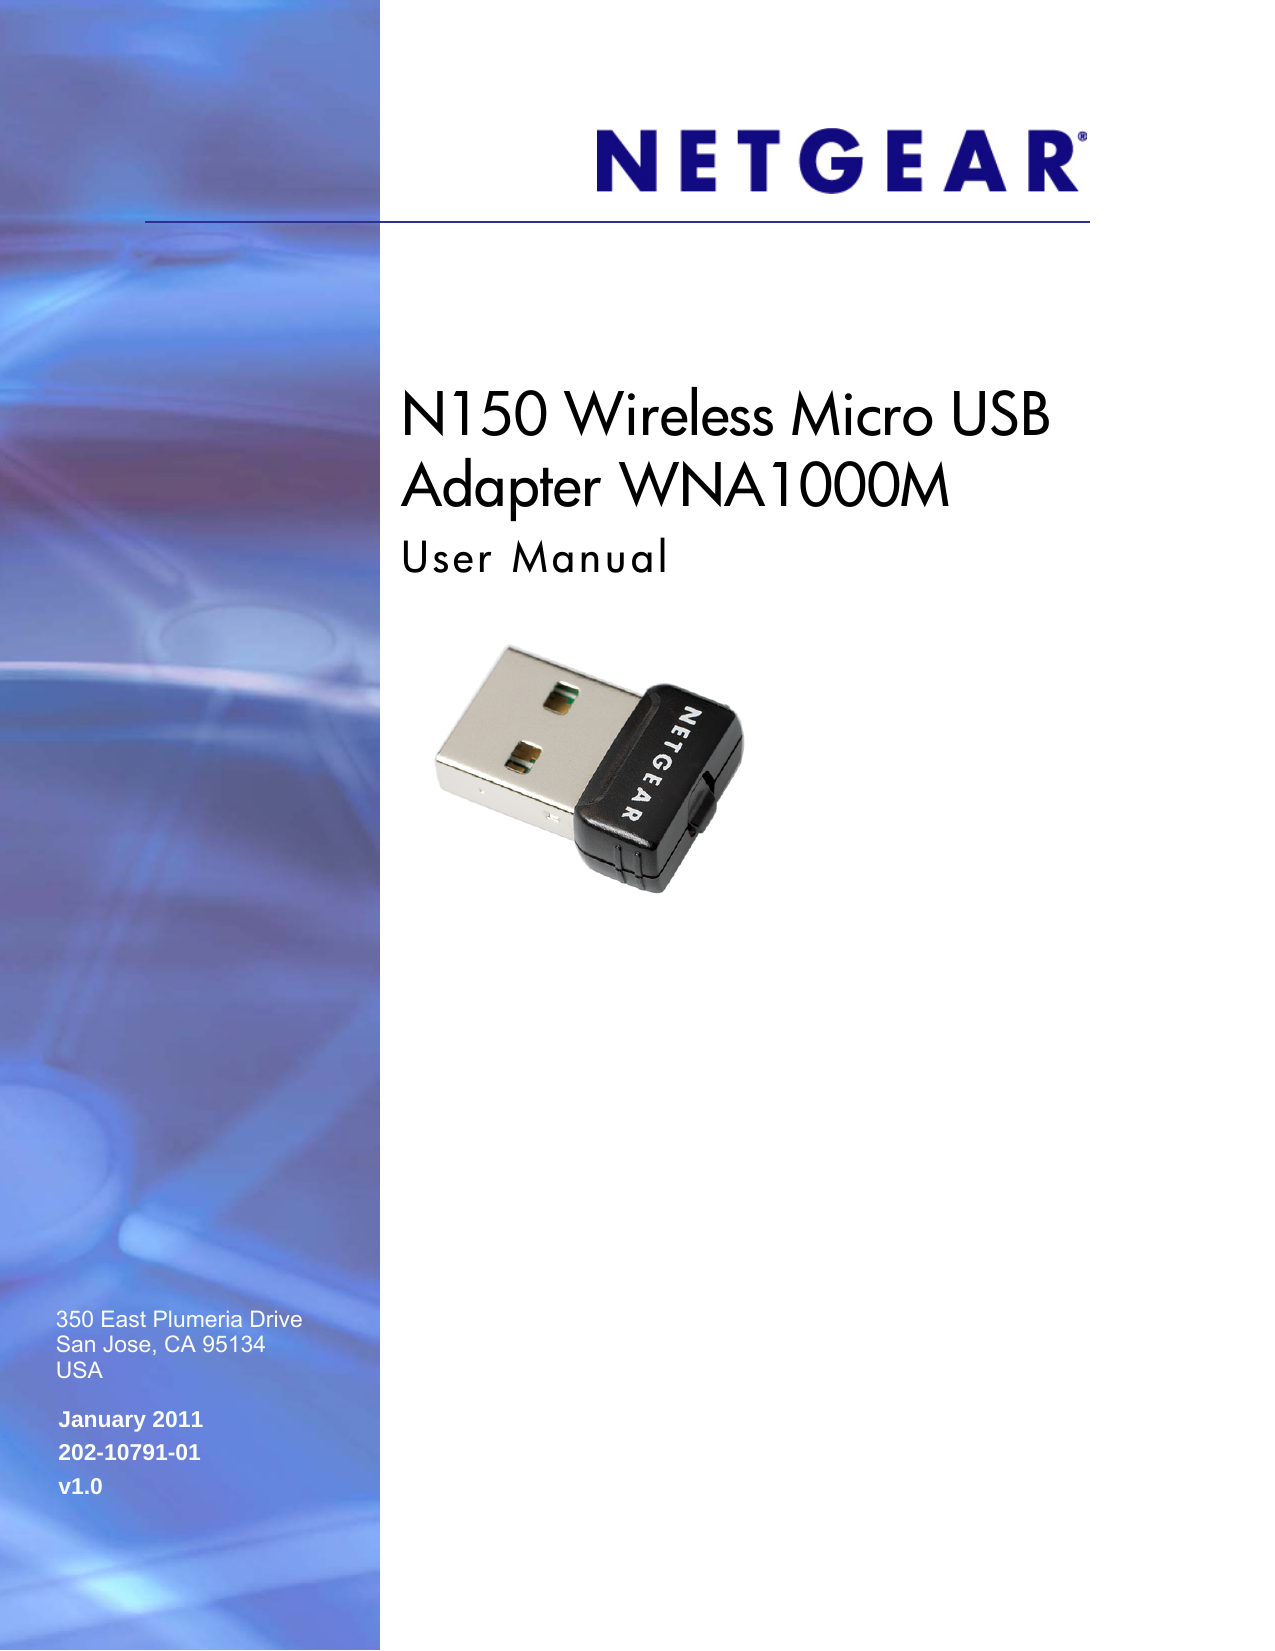 January 2011202-10791-01v1.0350 East Plumeria DriveSan Jose, CA 95134USAN150 Wireless Micro USB Adapter WNA1000MUser Manual